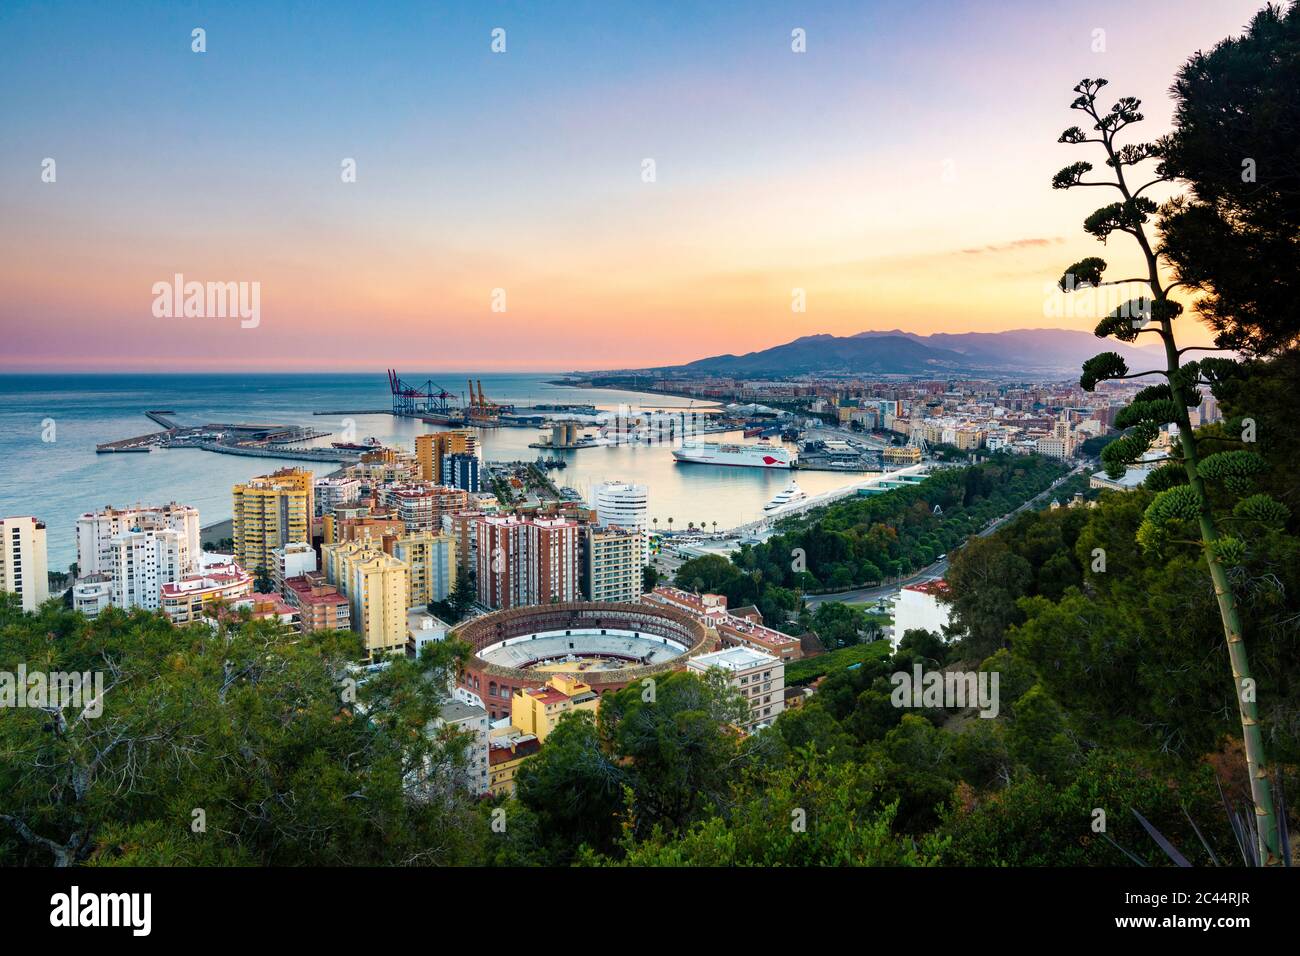 View from the Gibralfaro Lookout - Malaga, Spain Stock Photo